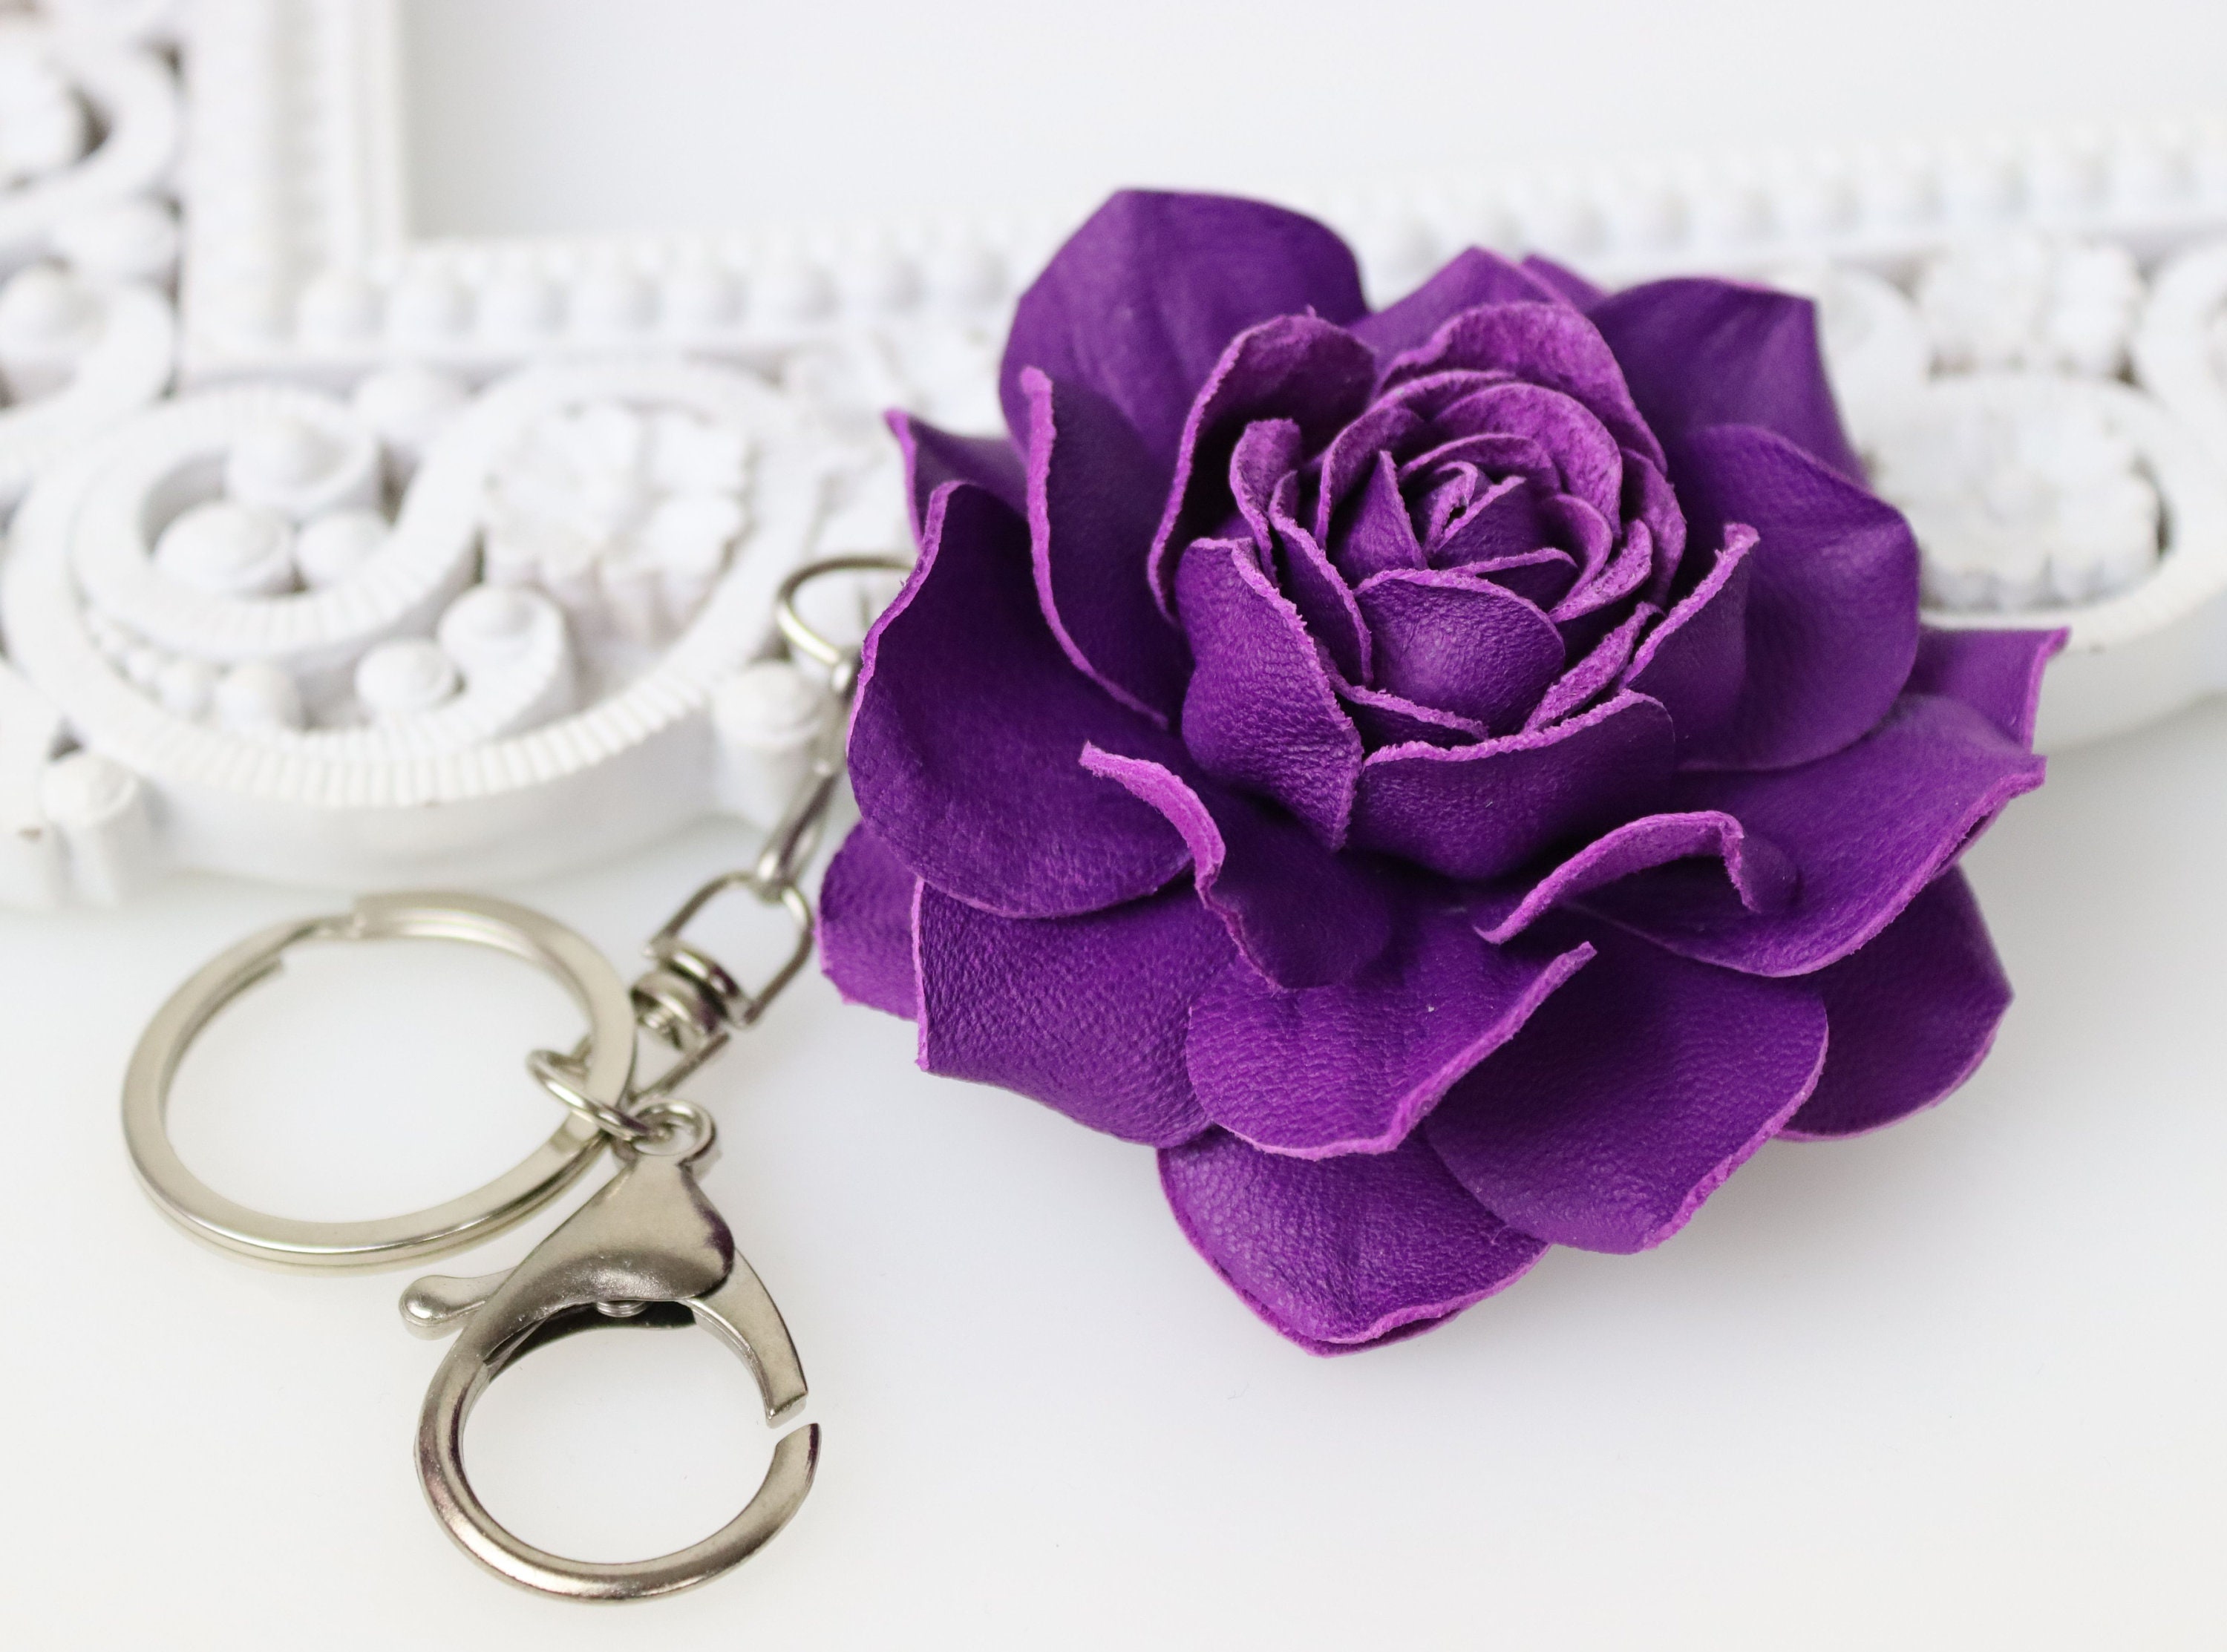 Dark Purple Floral Print Handbag Purse, Cute Flowers Art Top Zipper Ca –  Starcove Fashion